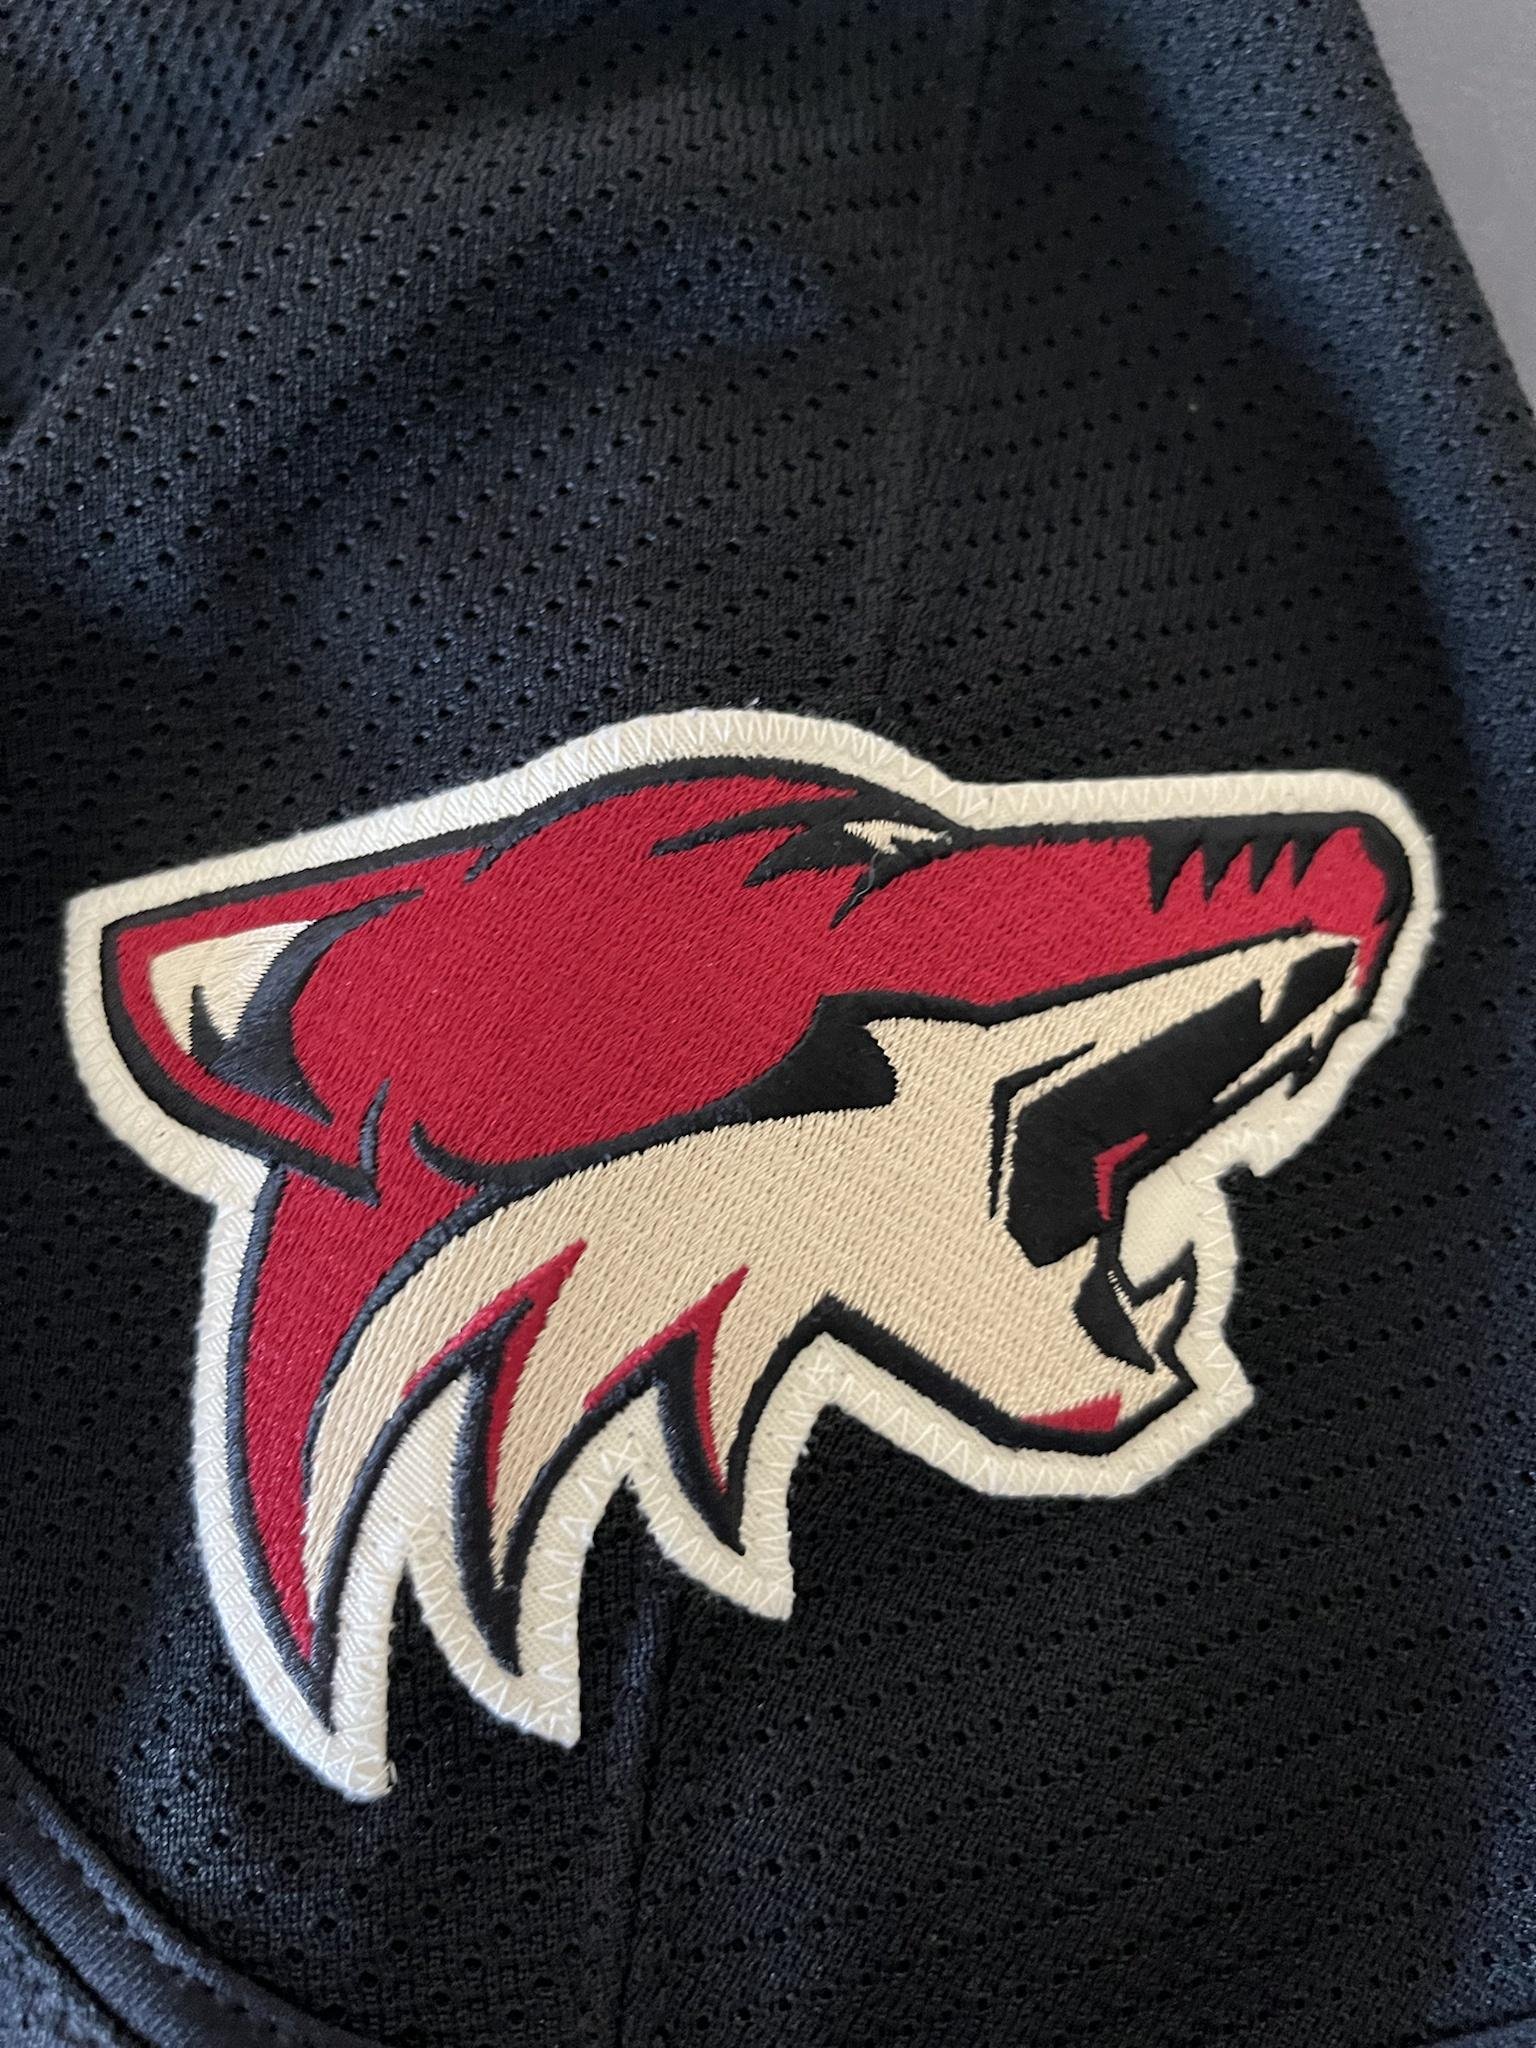 Paul Bissonnette 2009-2010 Phoenix Coyotes Alternate Set Game Worn